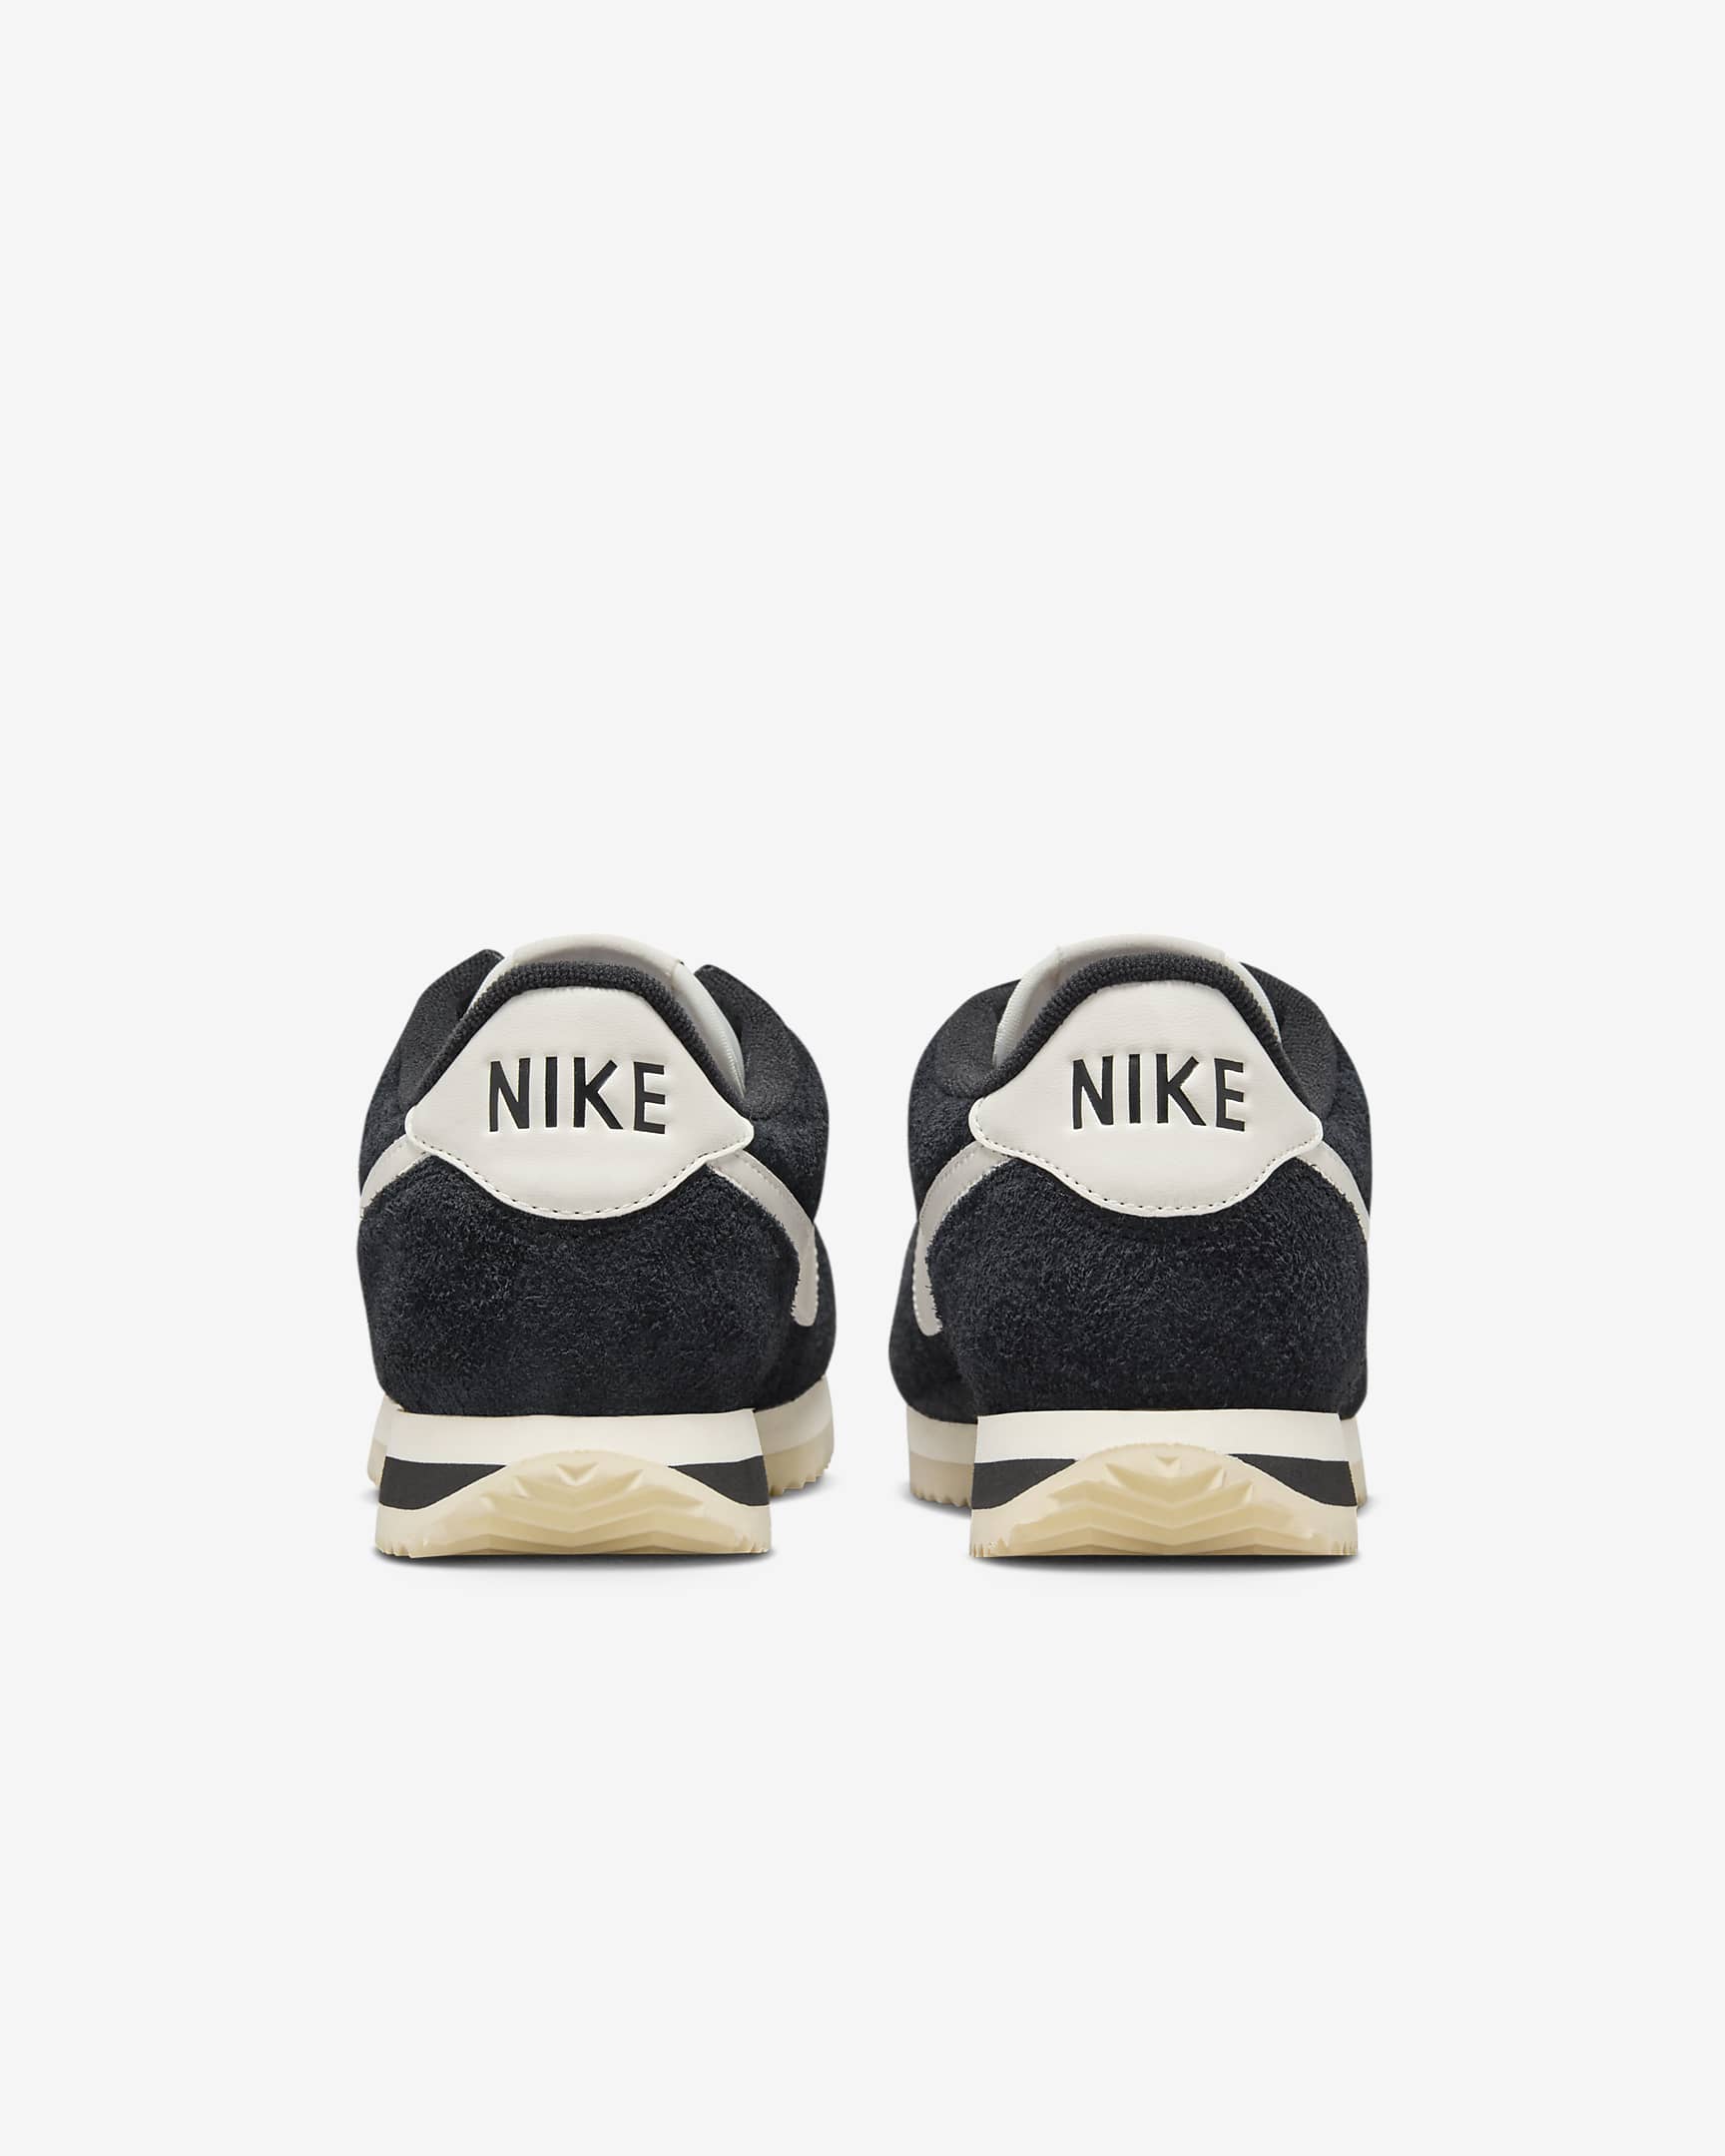 Chaussure Nike Cortez Vintage Suede - Noir/Coconut Milk/Team Orange/Sail